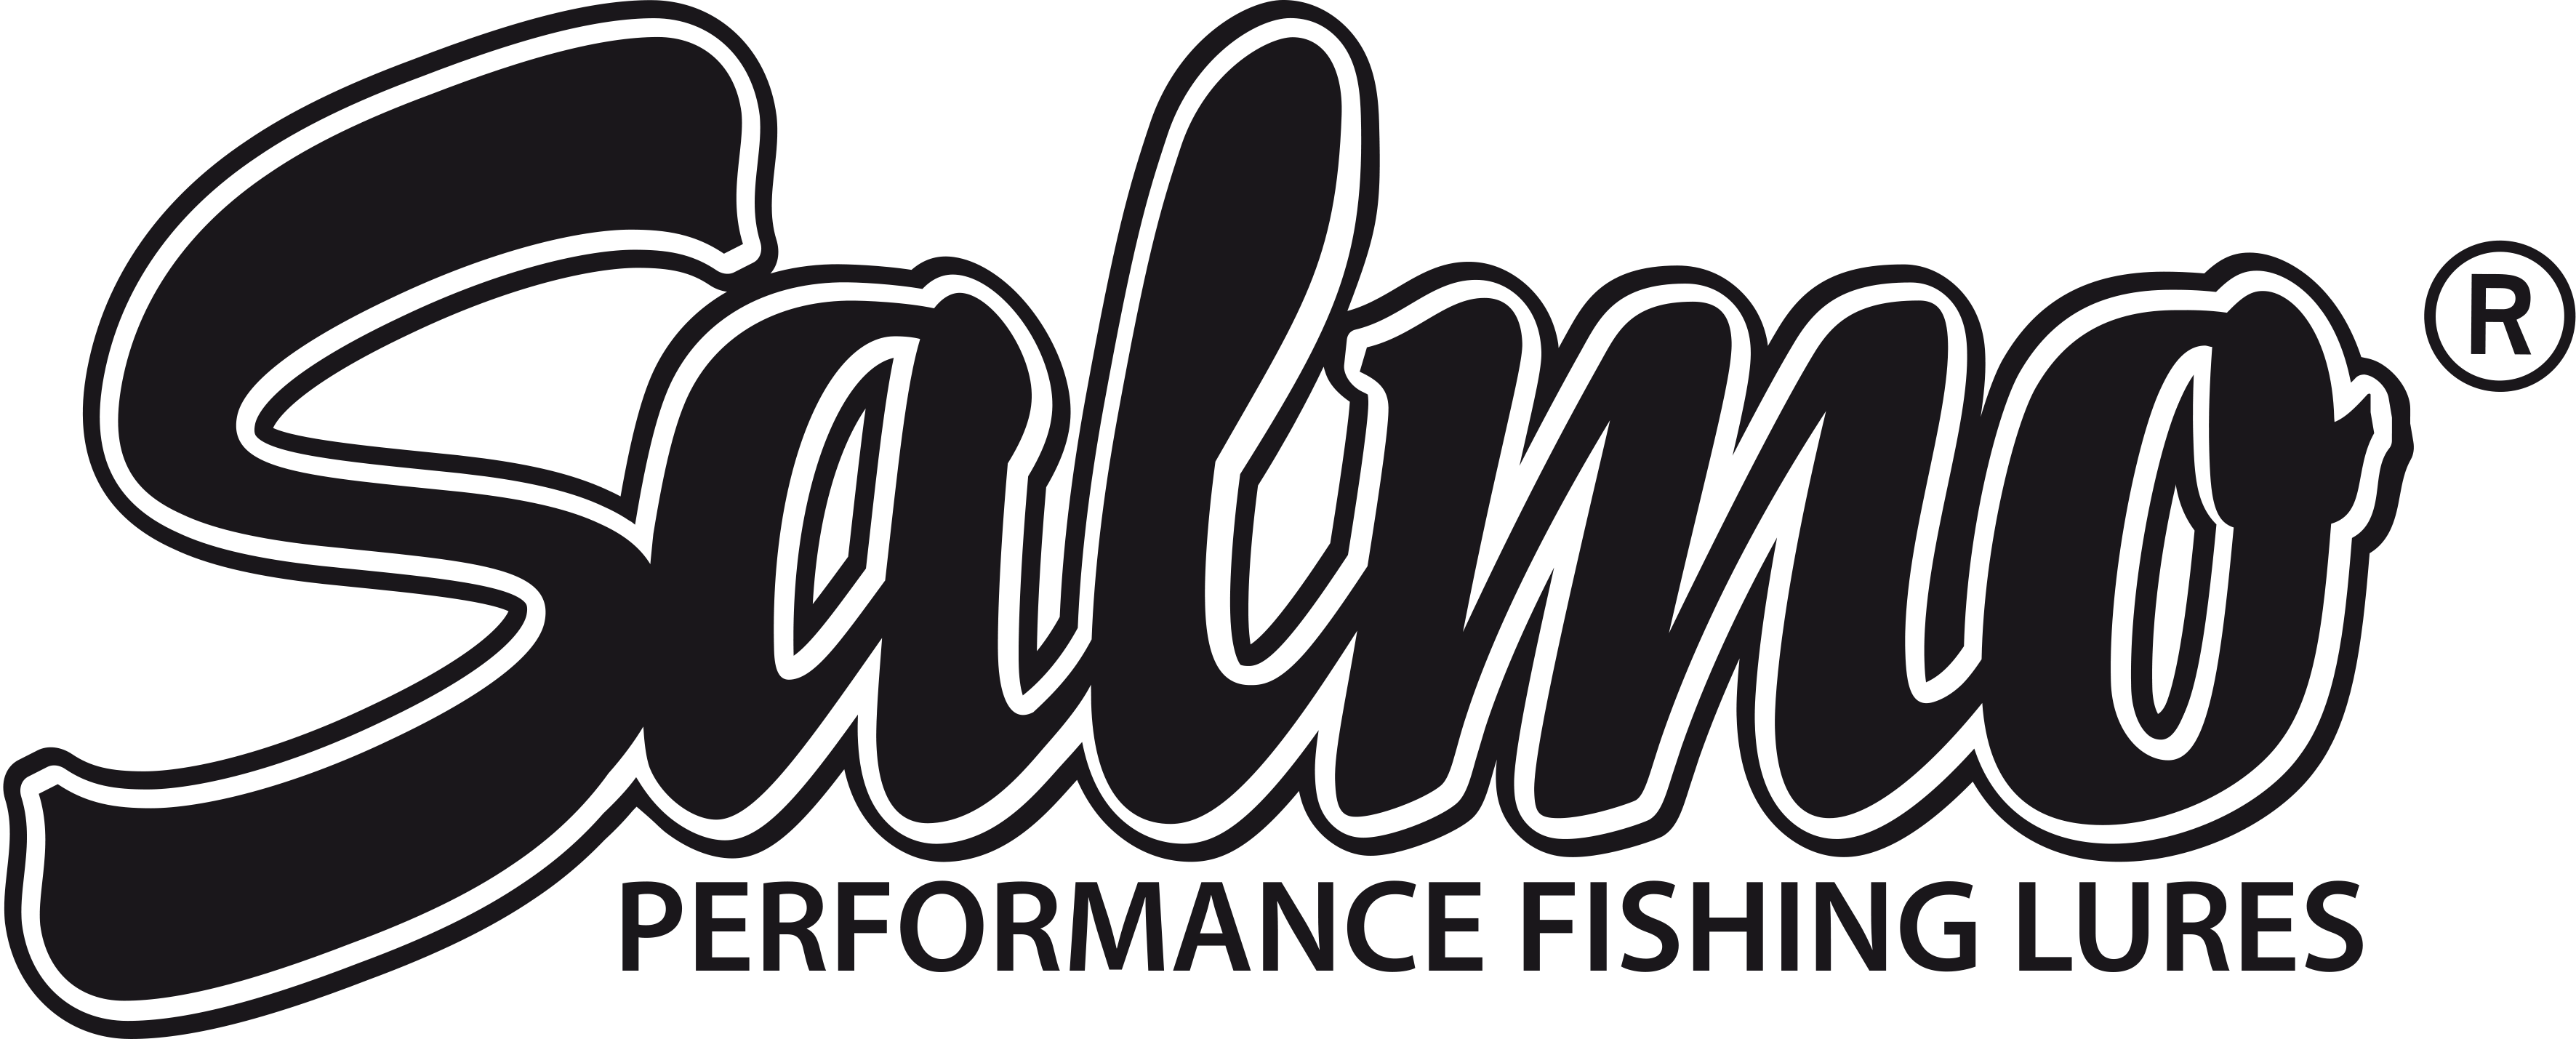 Salmo Performance fishing lures logo